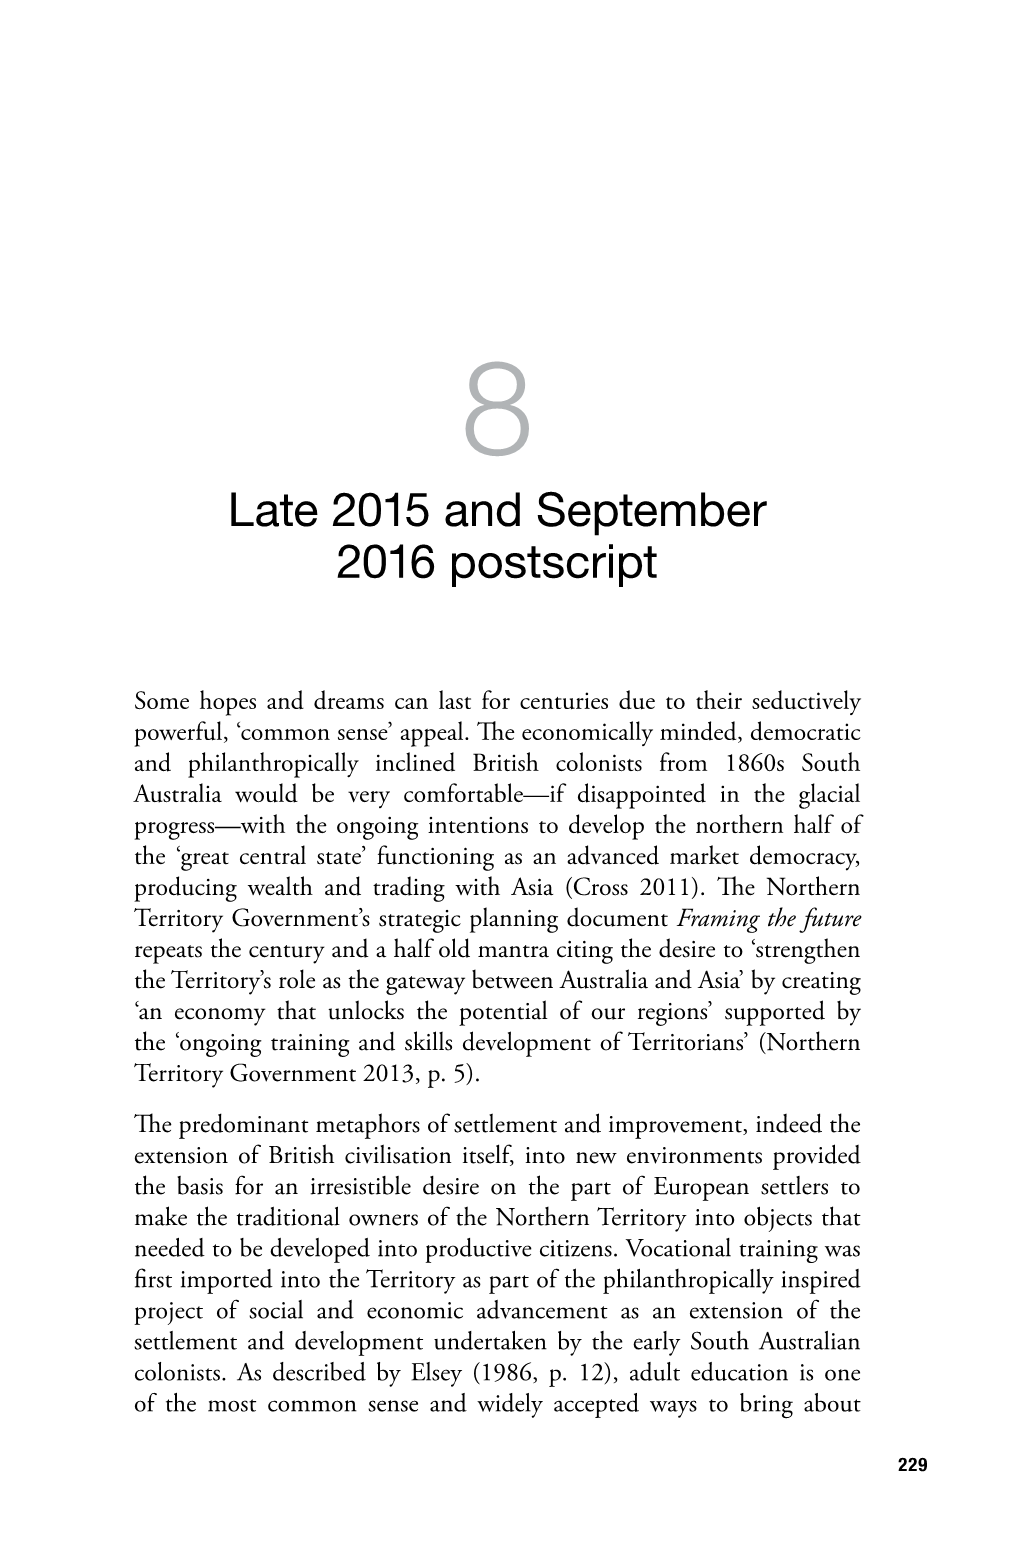 Late 2015 and September 2016 Postscript